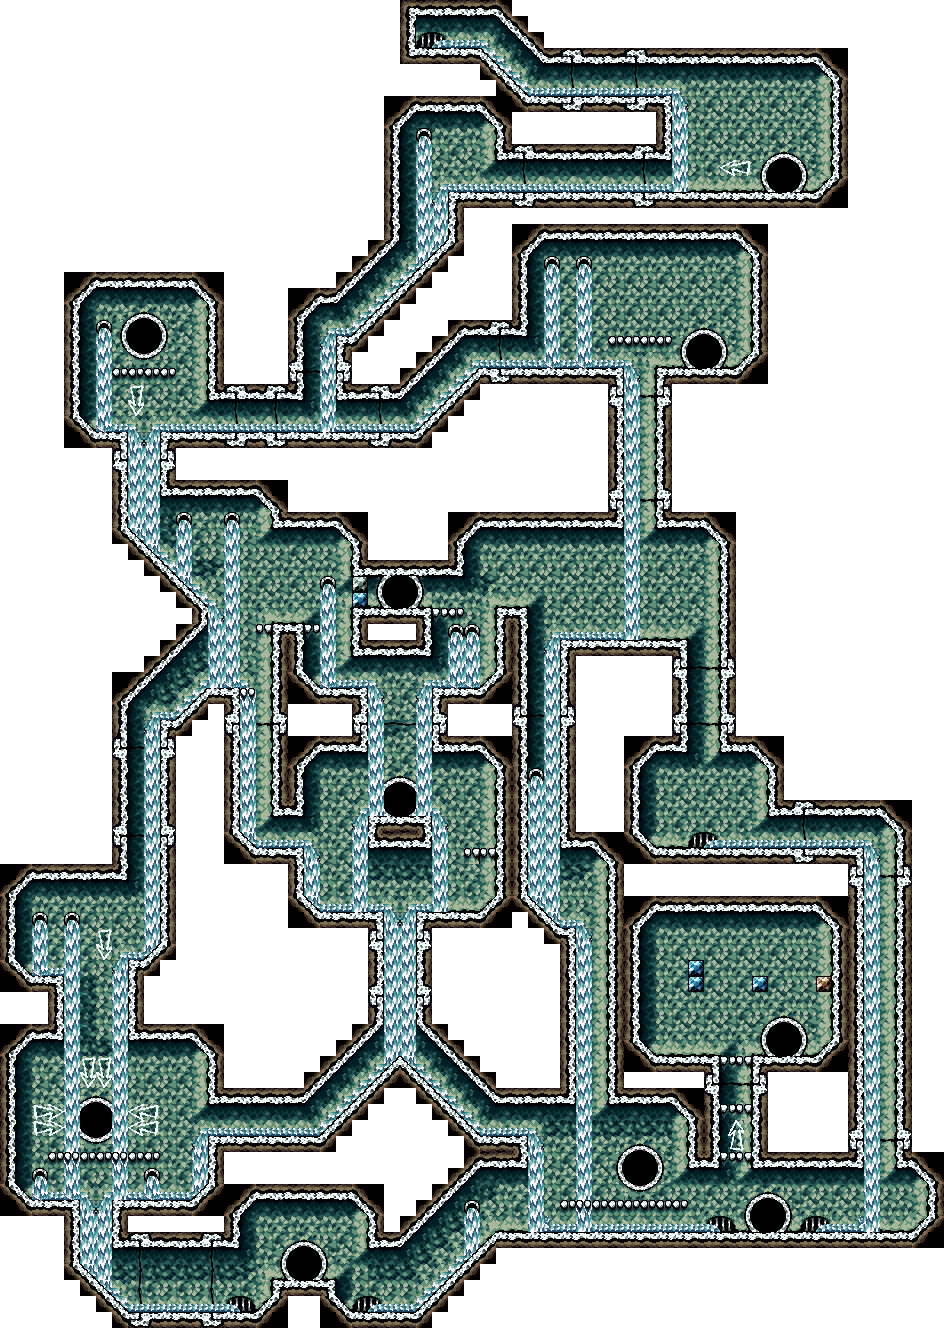 Super Mario World 2: Yoshi's Island - Extra 4: The Impossible? Maze (2/2)